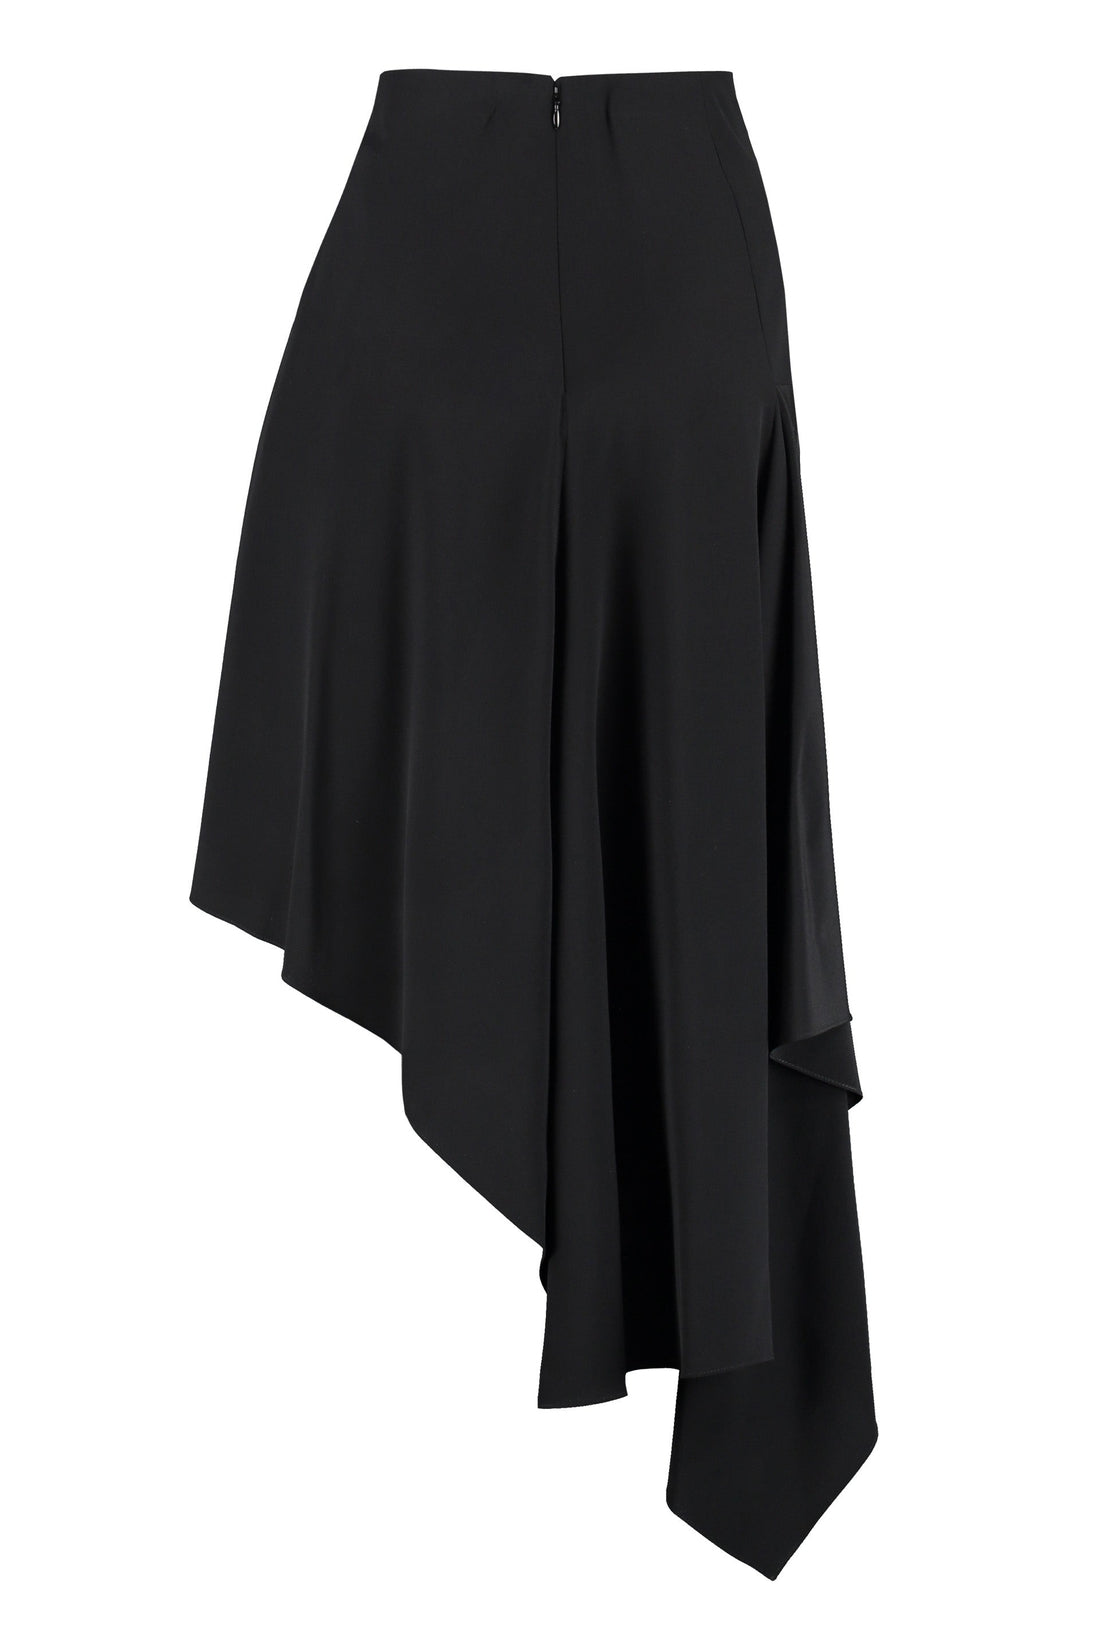 Givenchy-OUTLET-SALE-Asymmetric skirt-ARCHIVIST